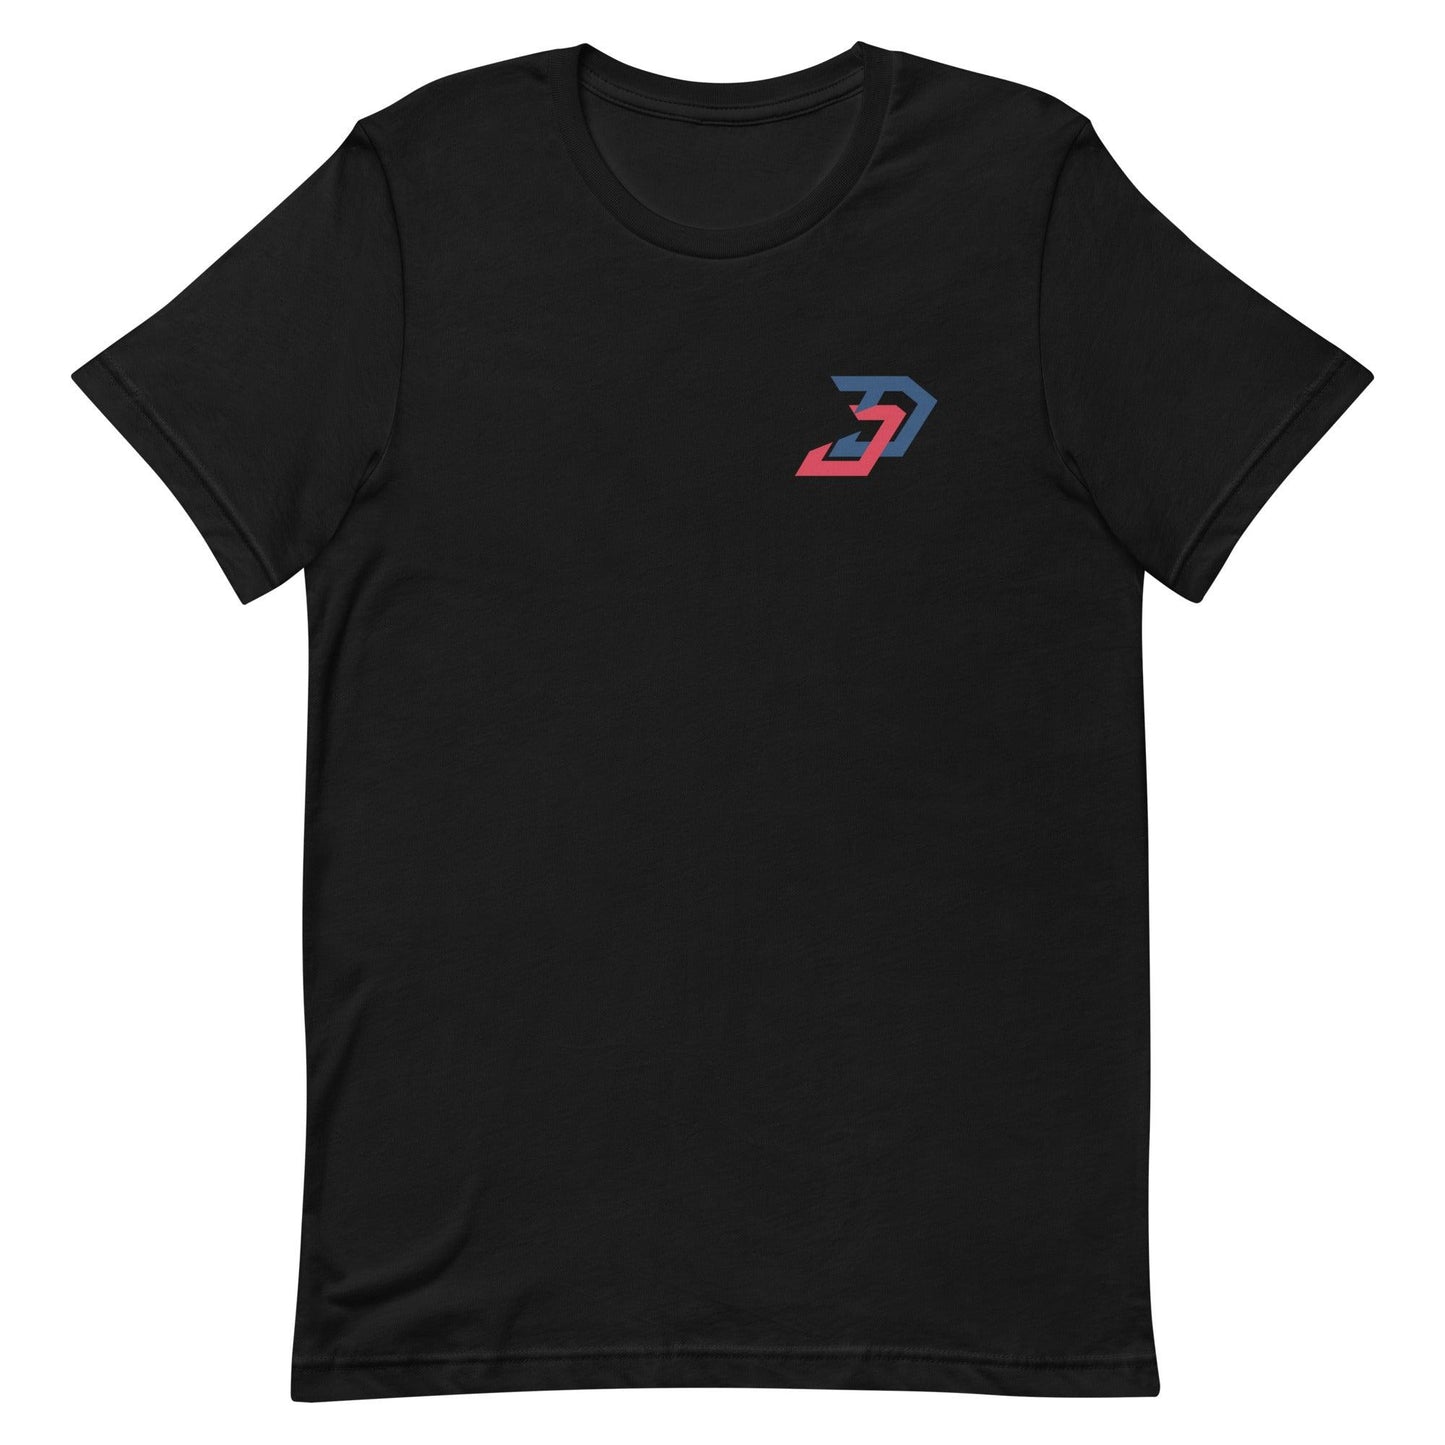 Jack DeGroat “Signature” t-shirt - Fan Arch